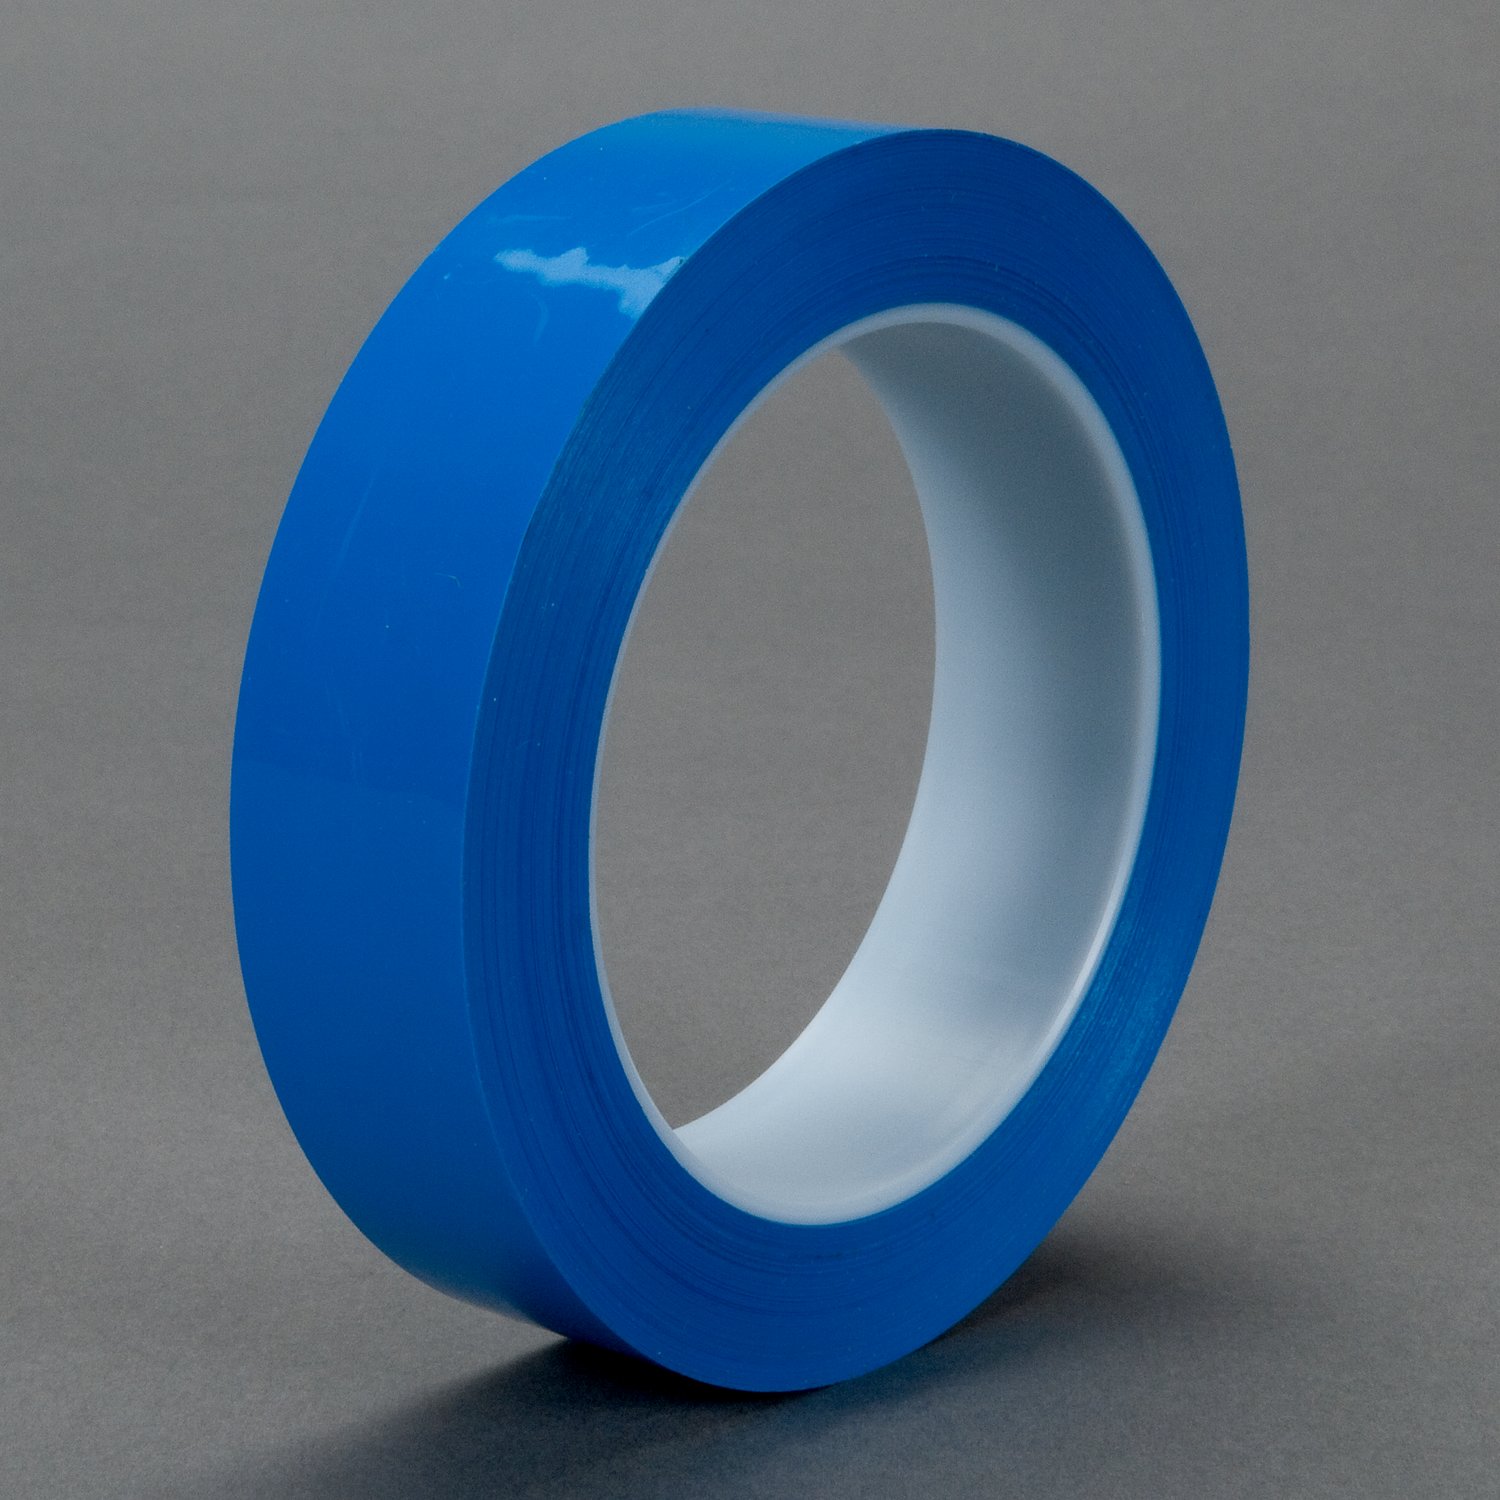 7000028942 - 3M Polyethylene Tape 483, Blue, 3 in x 36 yd, 5.0 mil, 12 rolls per
case